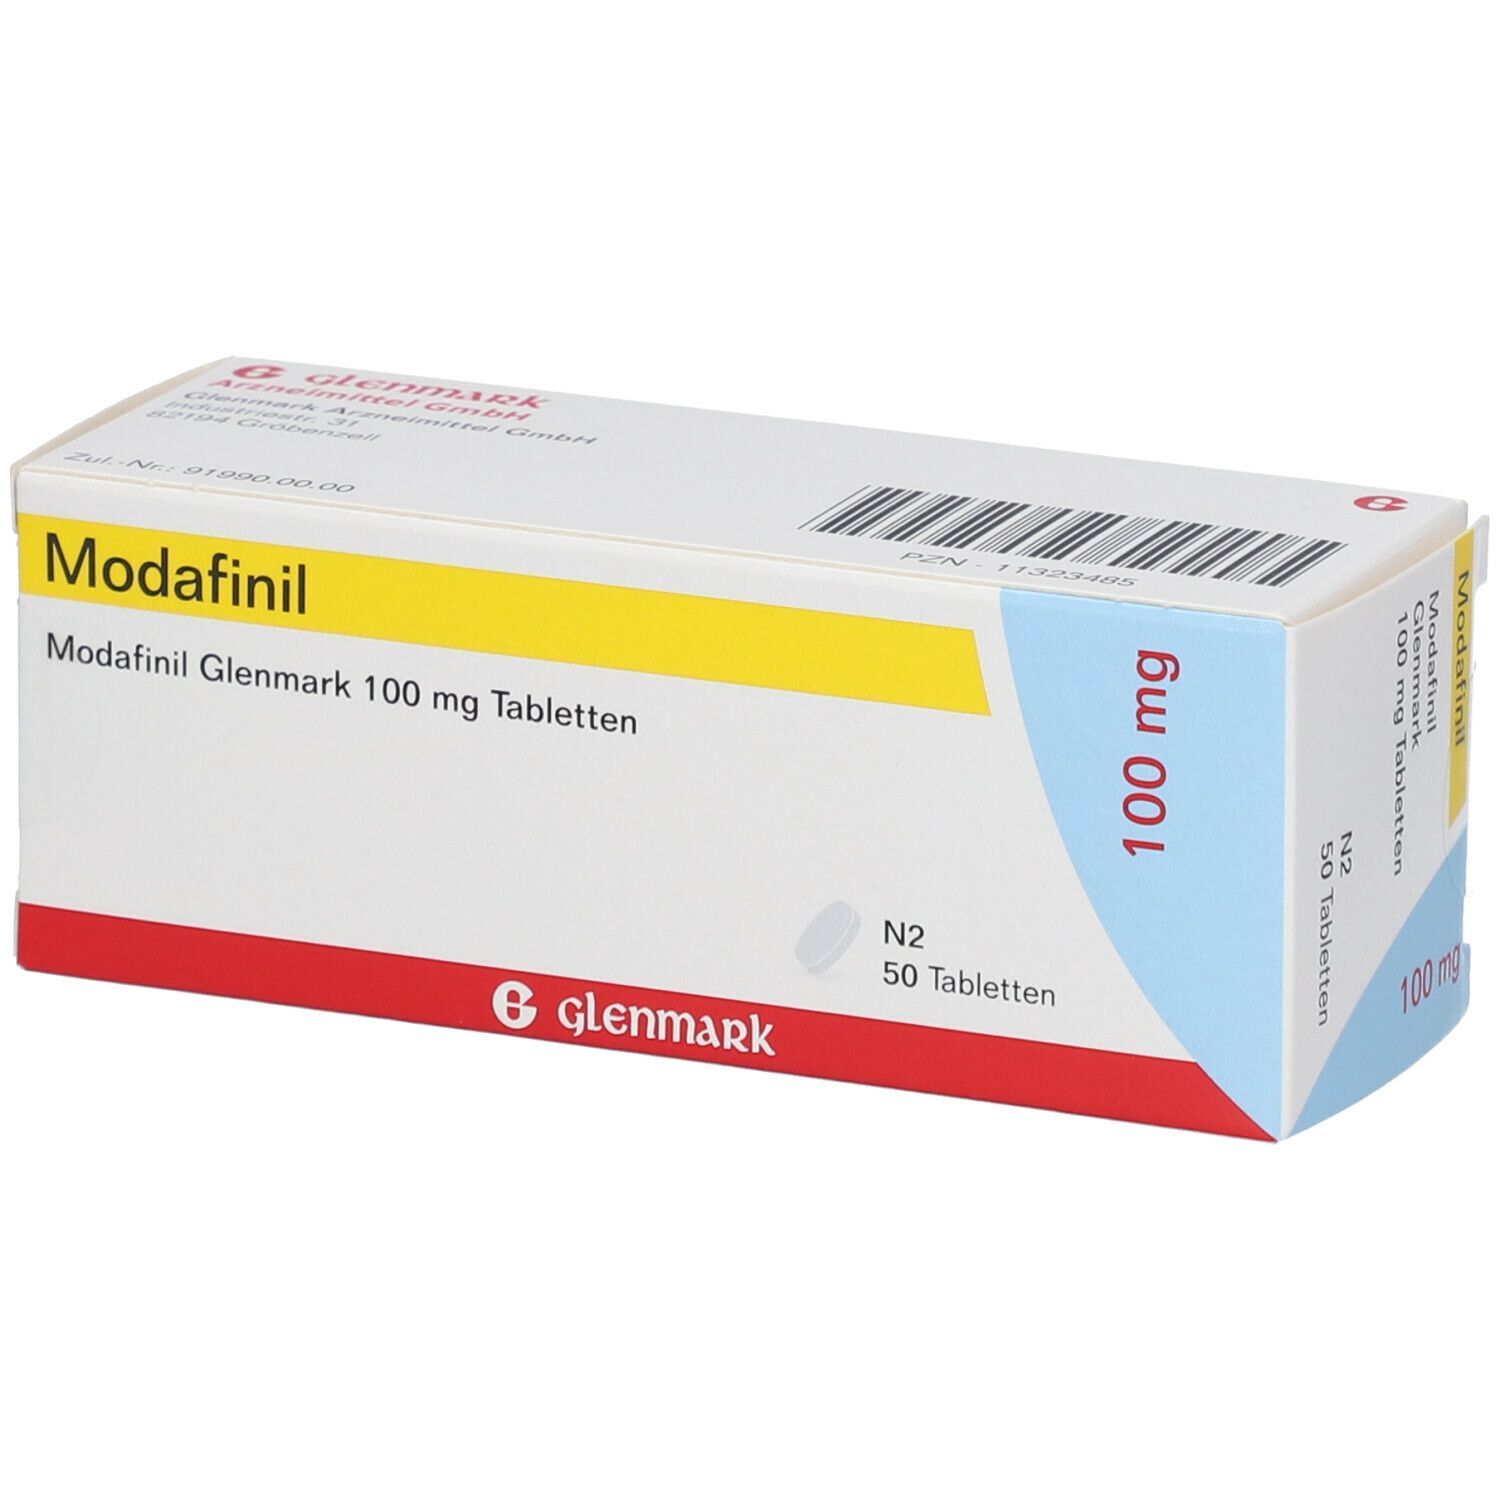 Modafinil Glenmark 100 mg